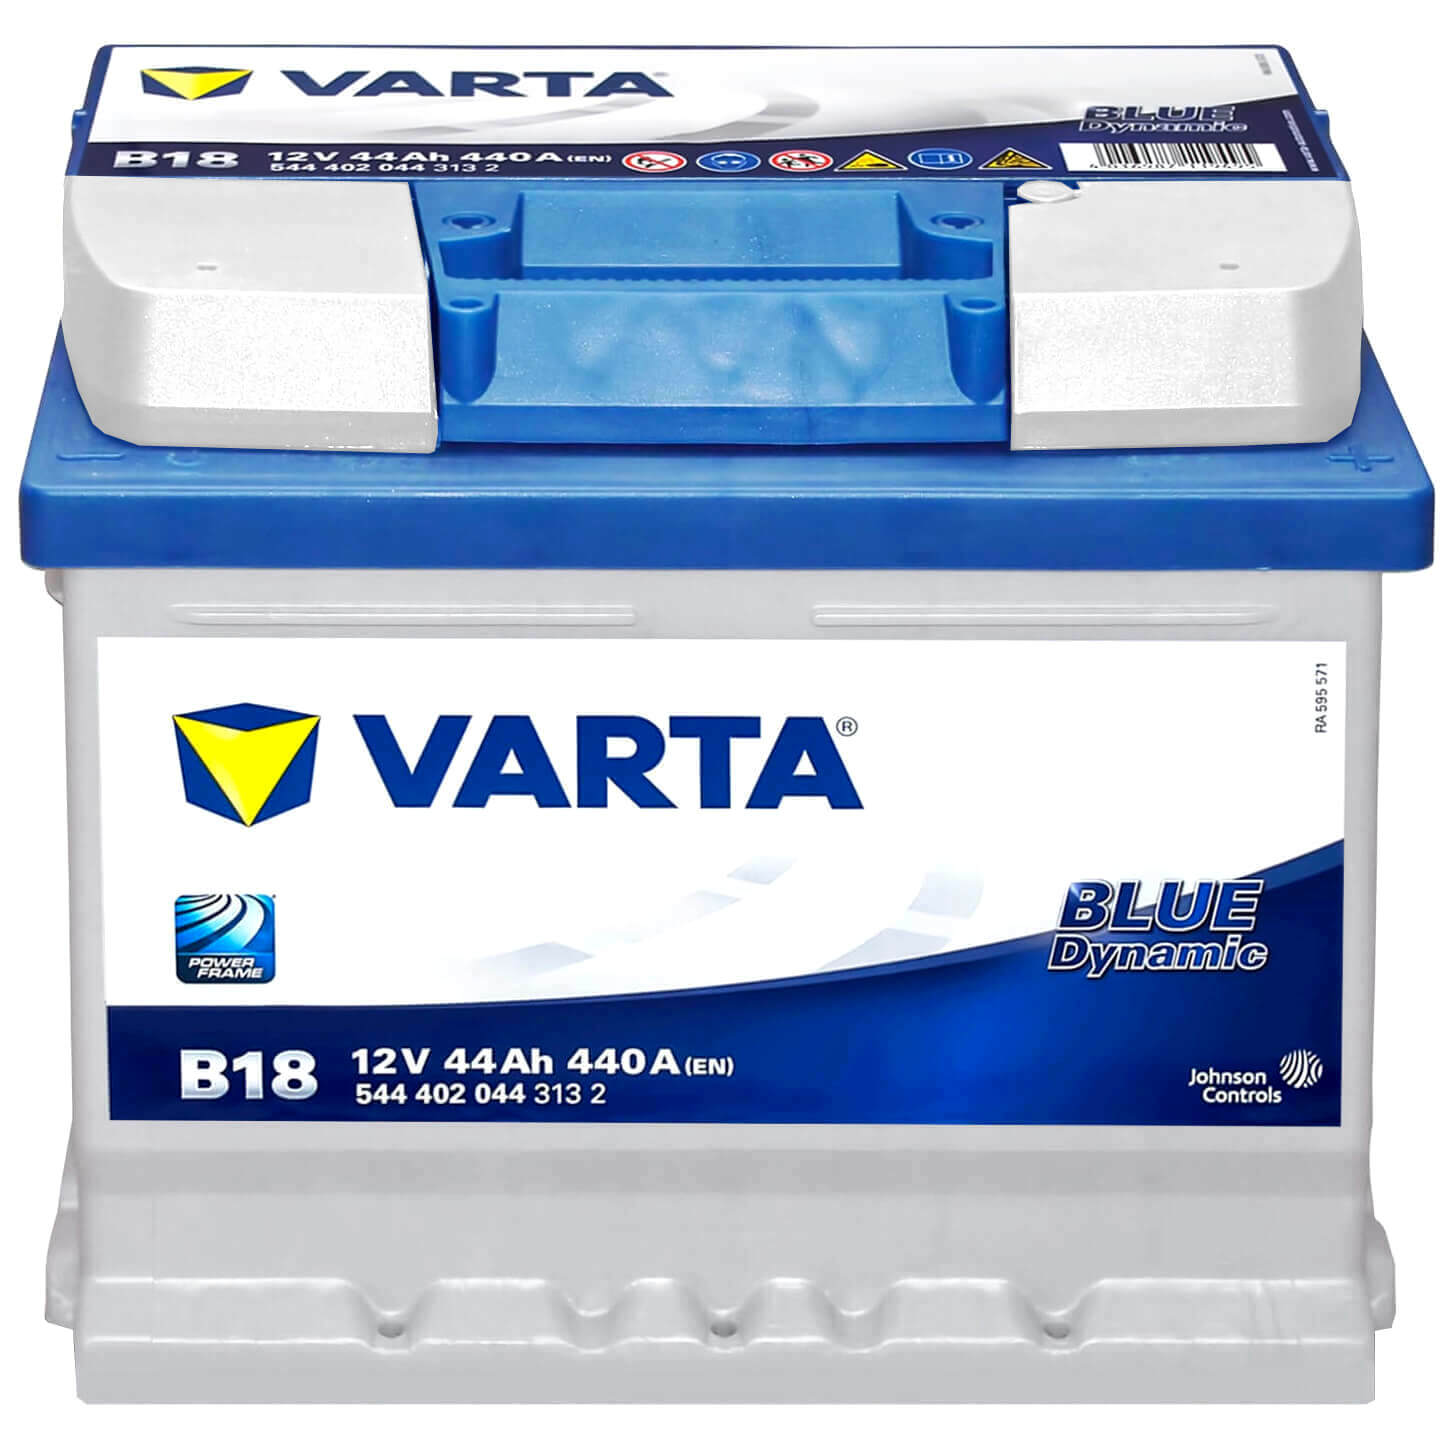 Varta B18 Blue Dynamic 12V 44Ah 440A Batterie 5444020443132